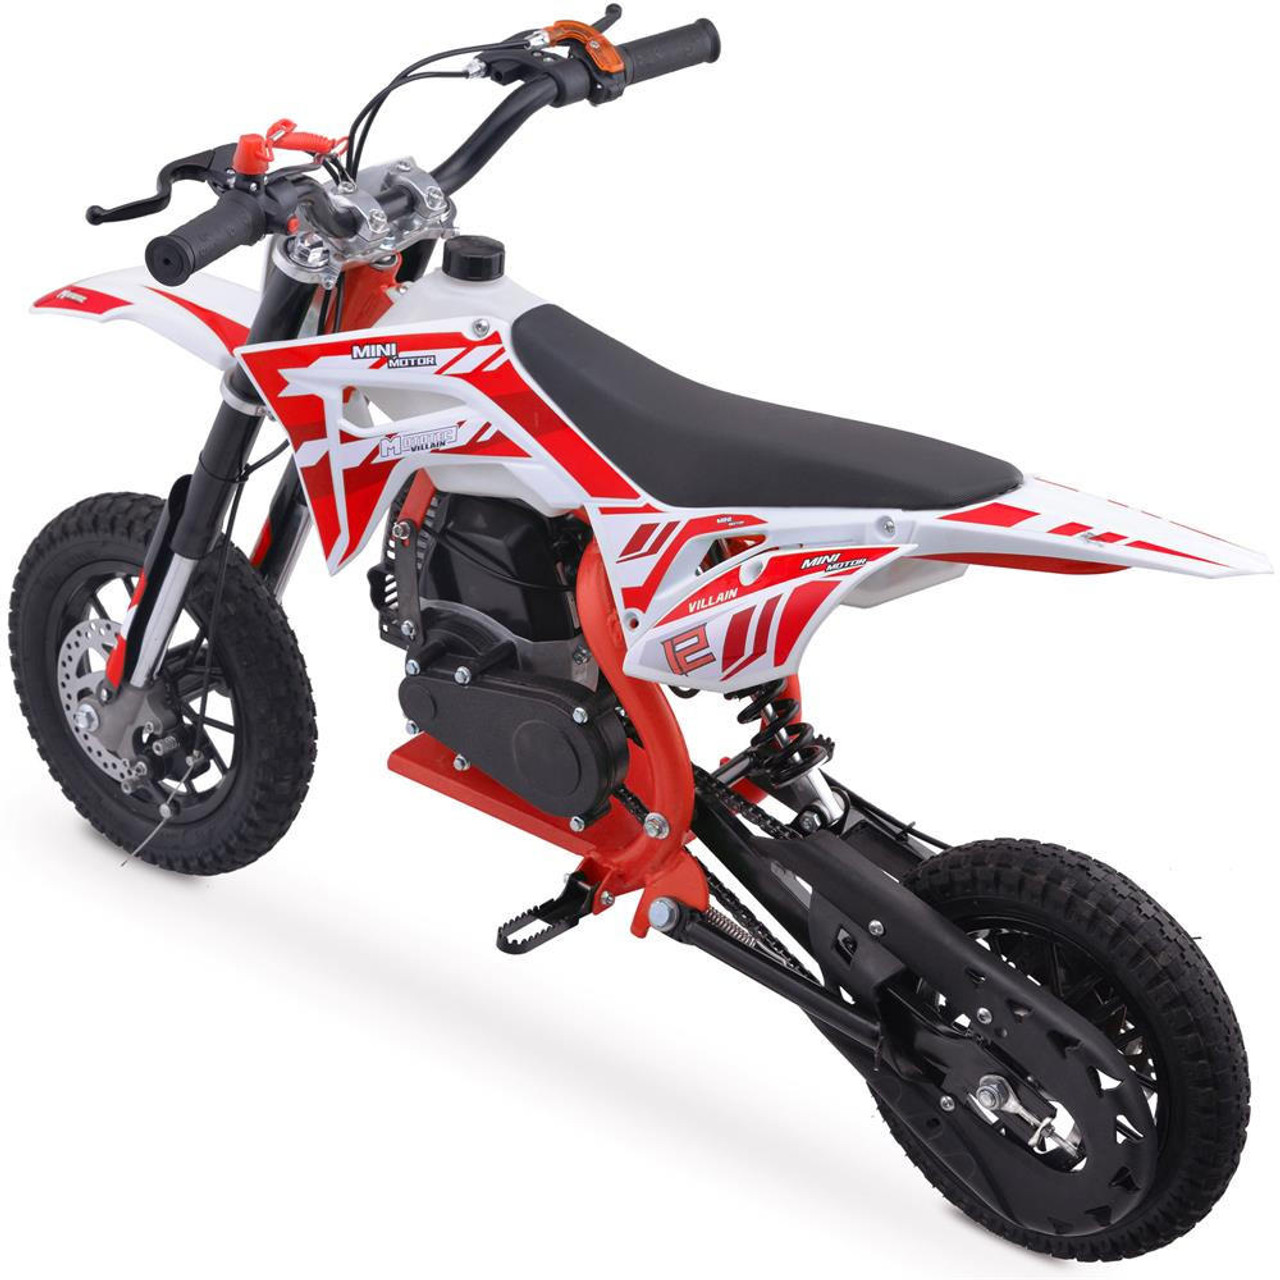  Mototec Villain 52cc 2-stroke Kids Gas Dirt Bike Red 